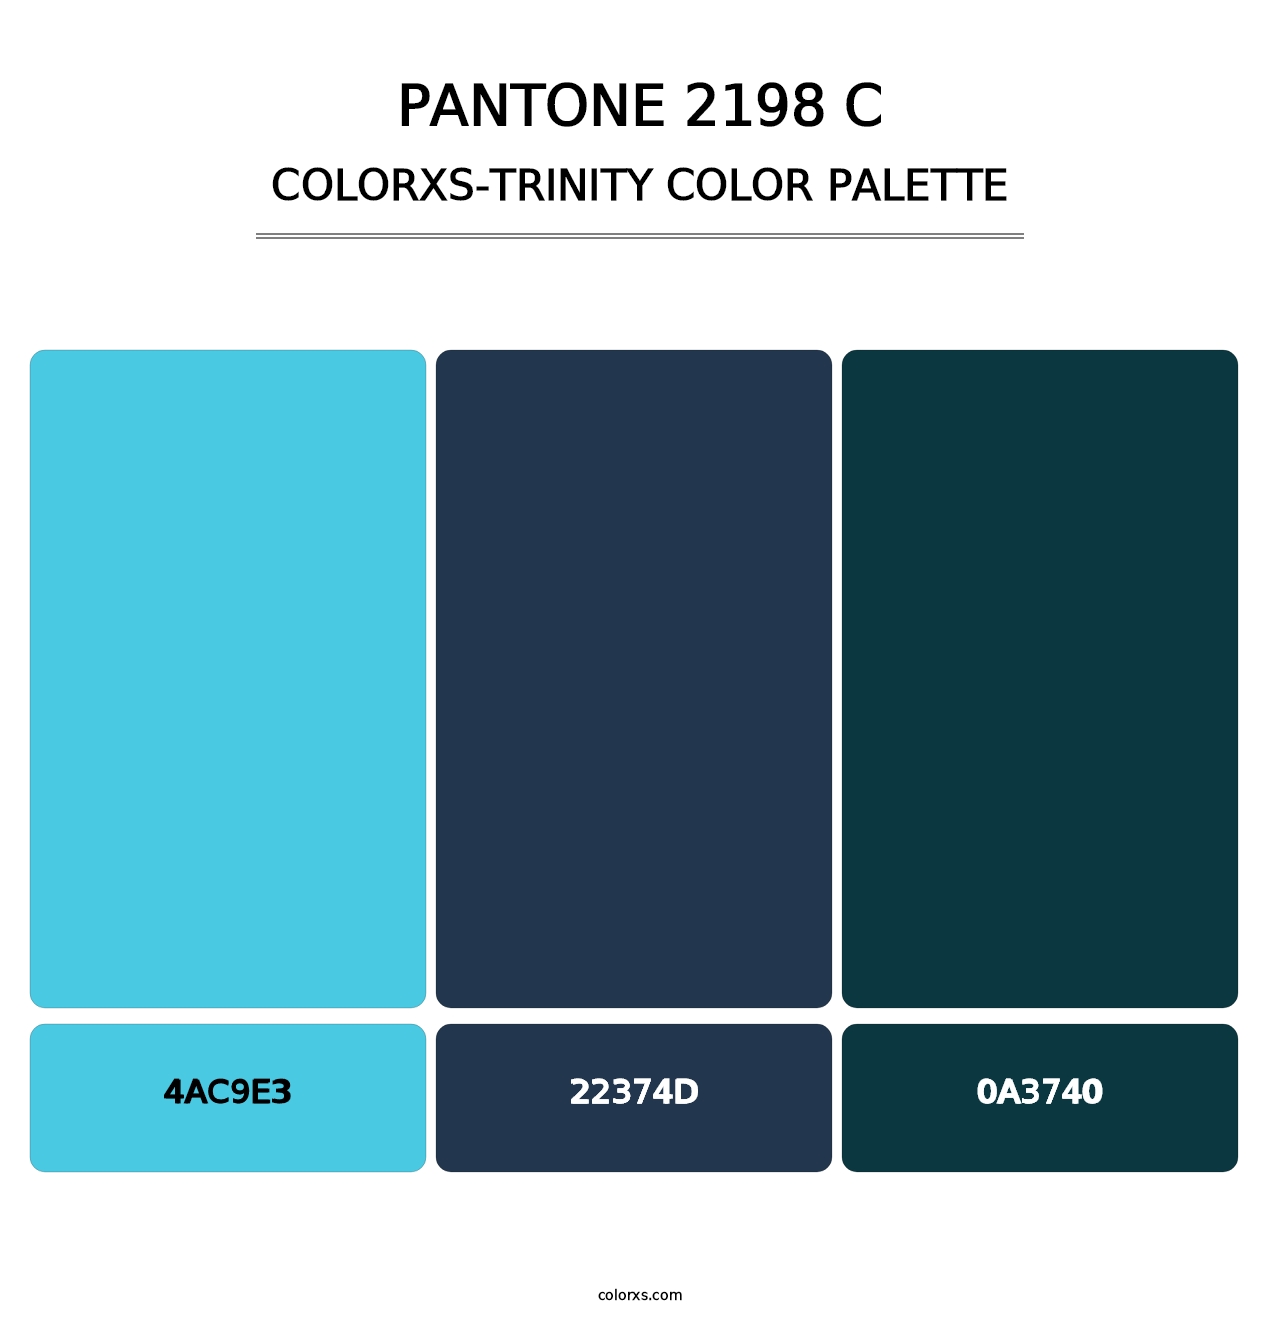 PANTONE 2198 C - Colorxs Trinity Palette